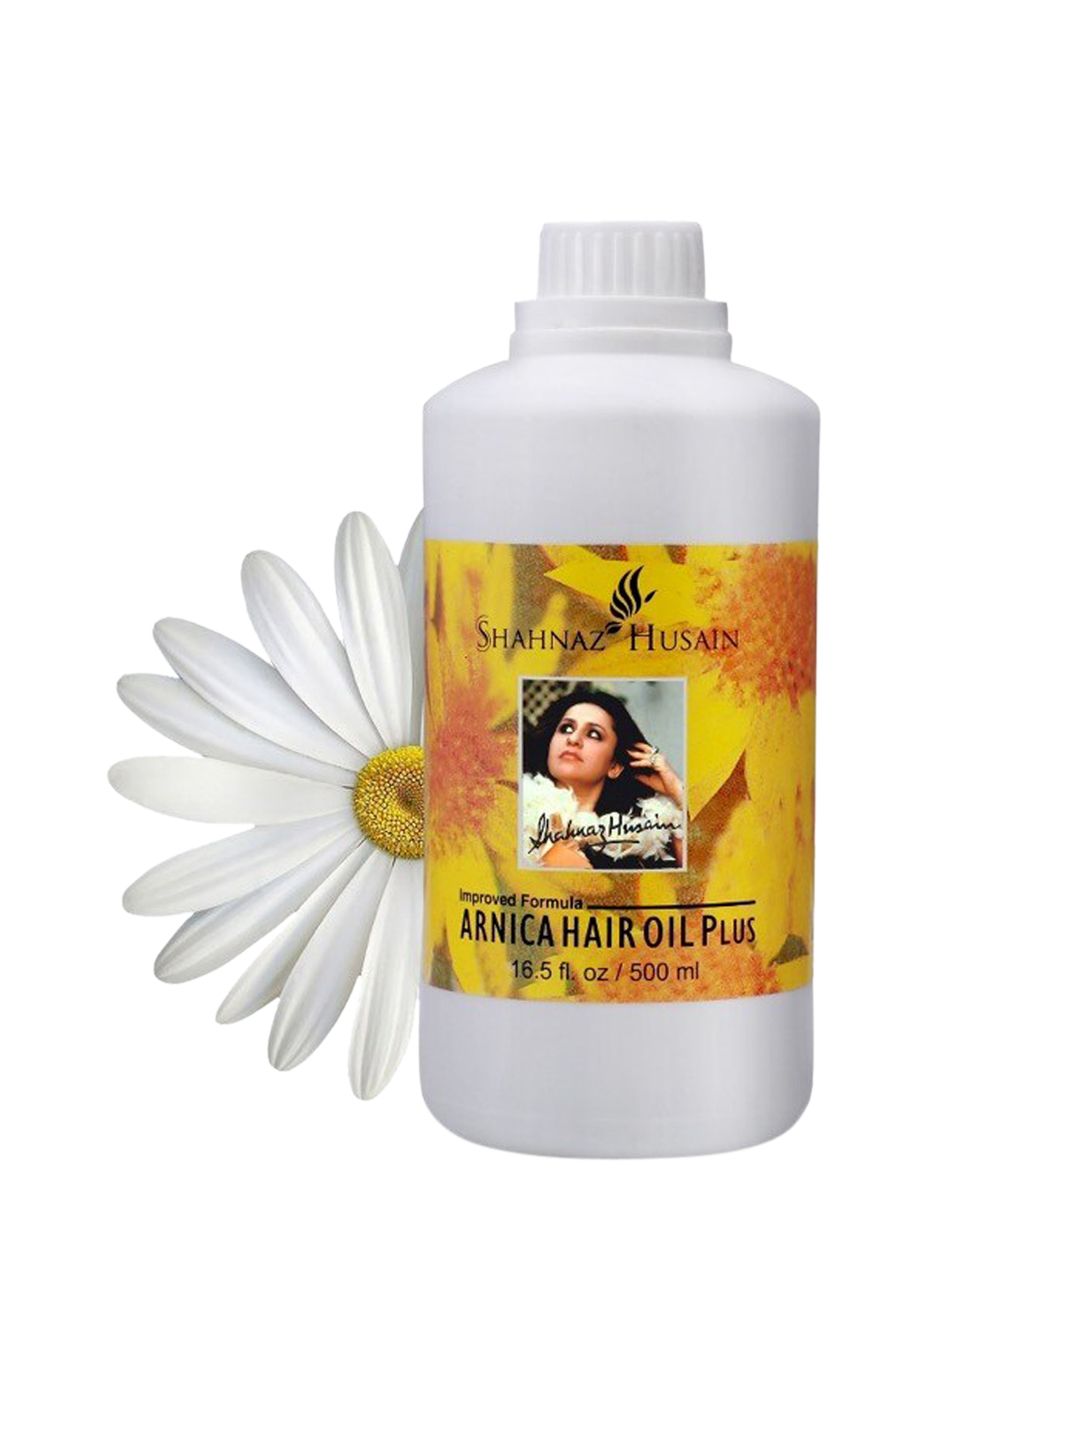 Shahnaz Husain Arnica Hair Oil Plus with Amla & Bhringraj 500 ml Price in India